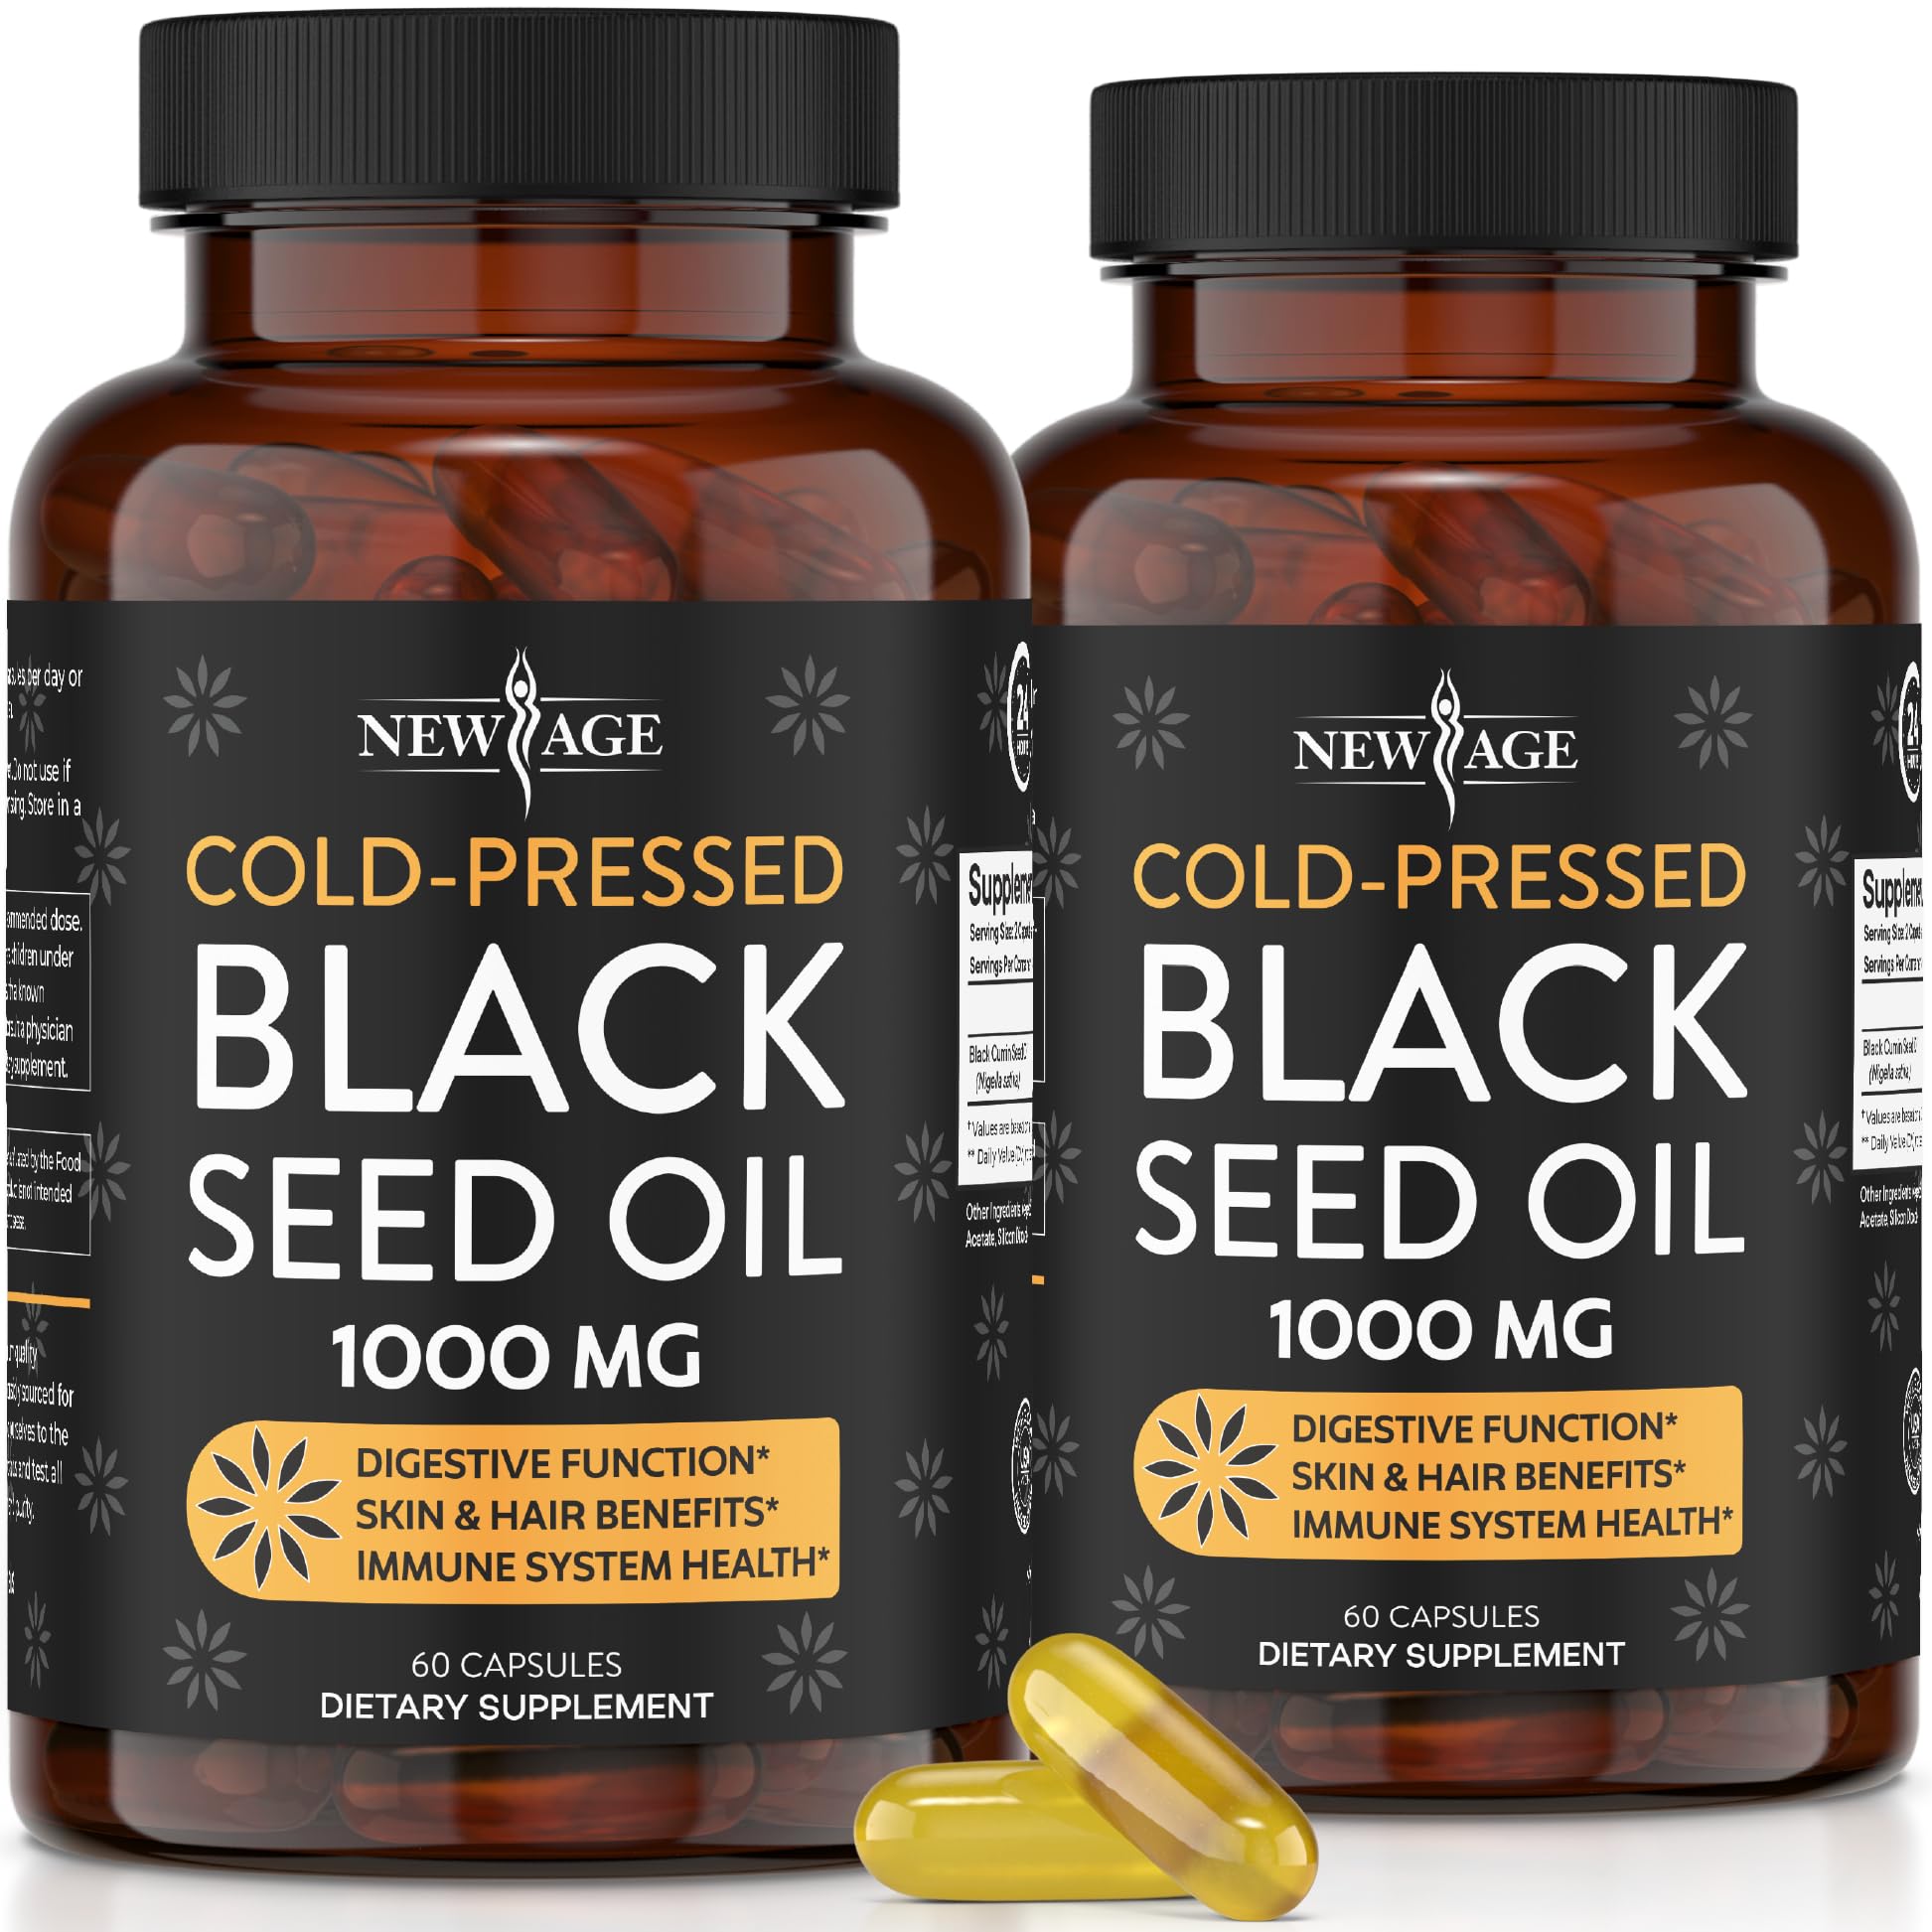 Black Seed Oil Softgel Capsules - Premium Cold-Pressed Nigella Sativa Producing Pure Black Cumin Seed Oil - Non-GMO & Vegetarian (120 Softgels)